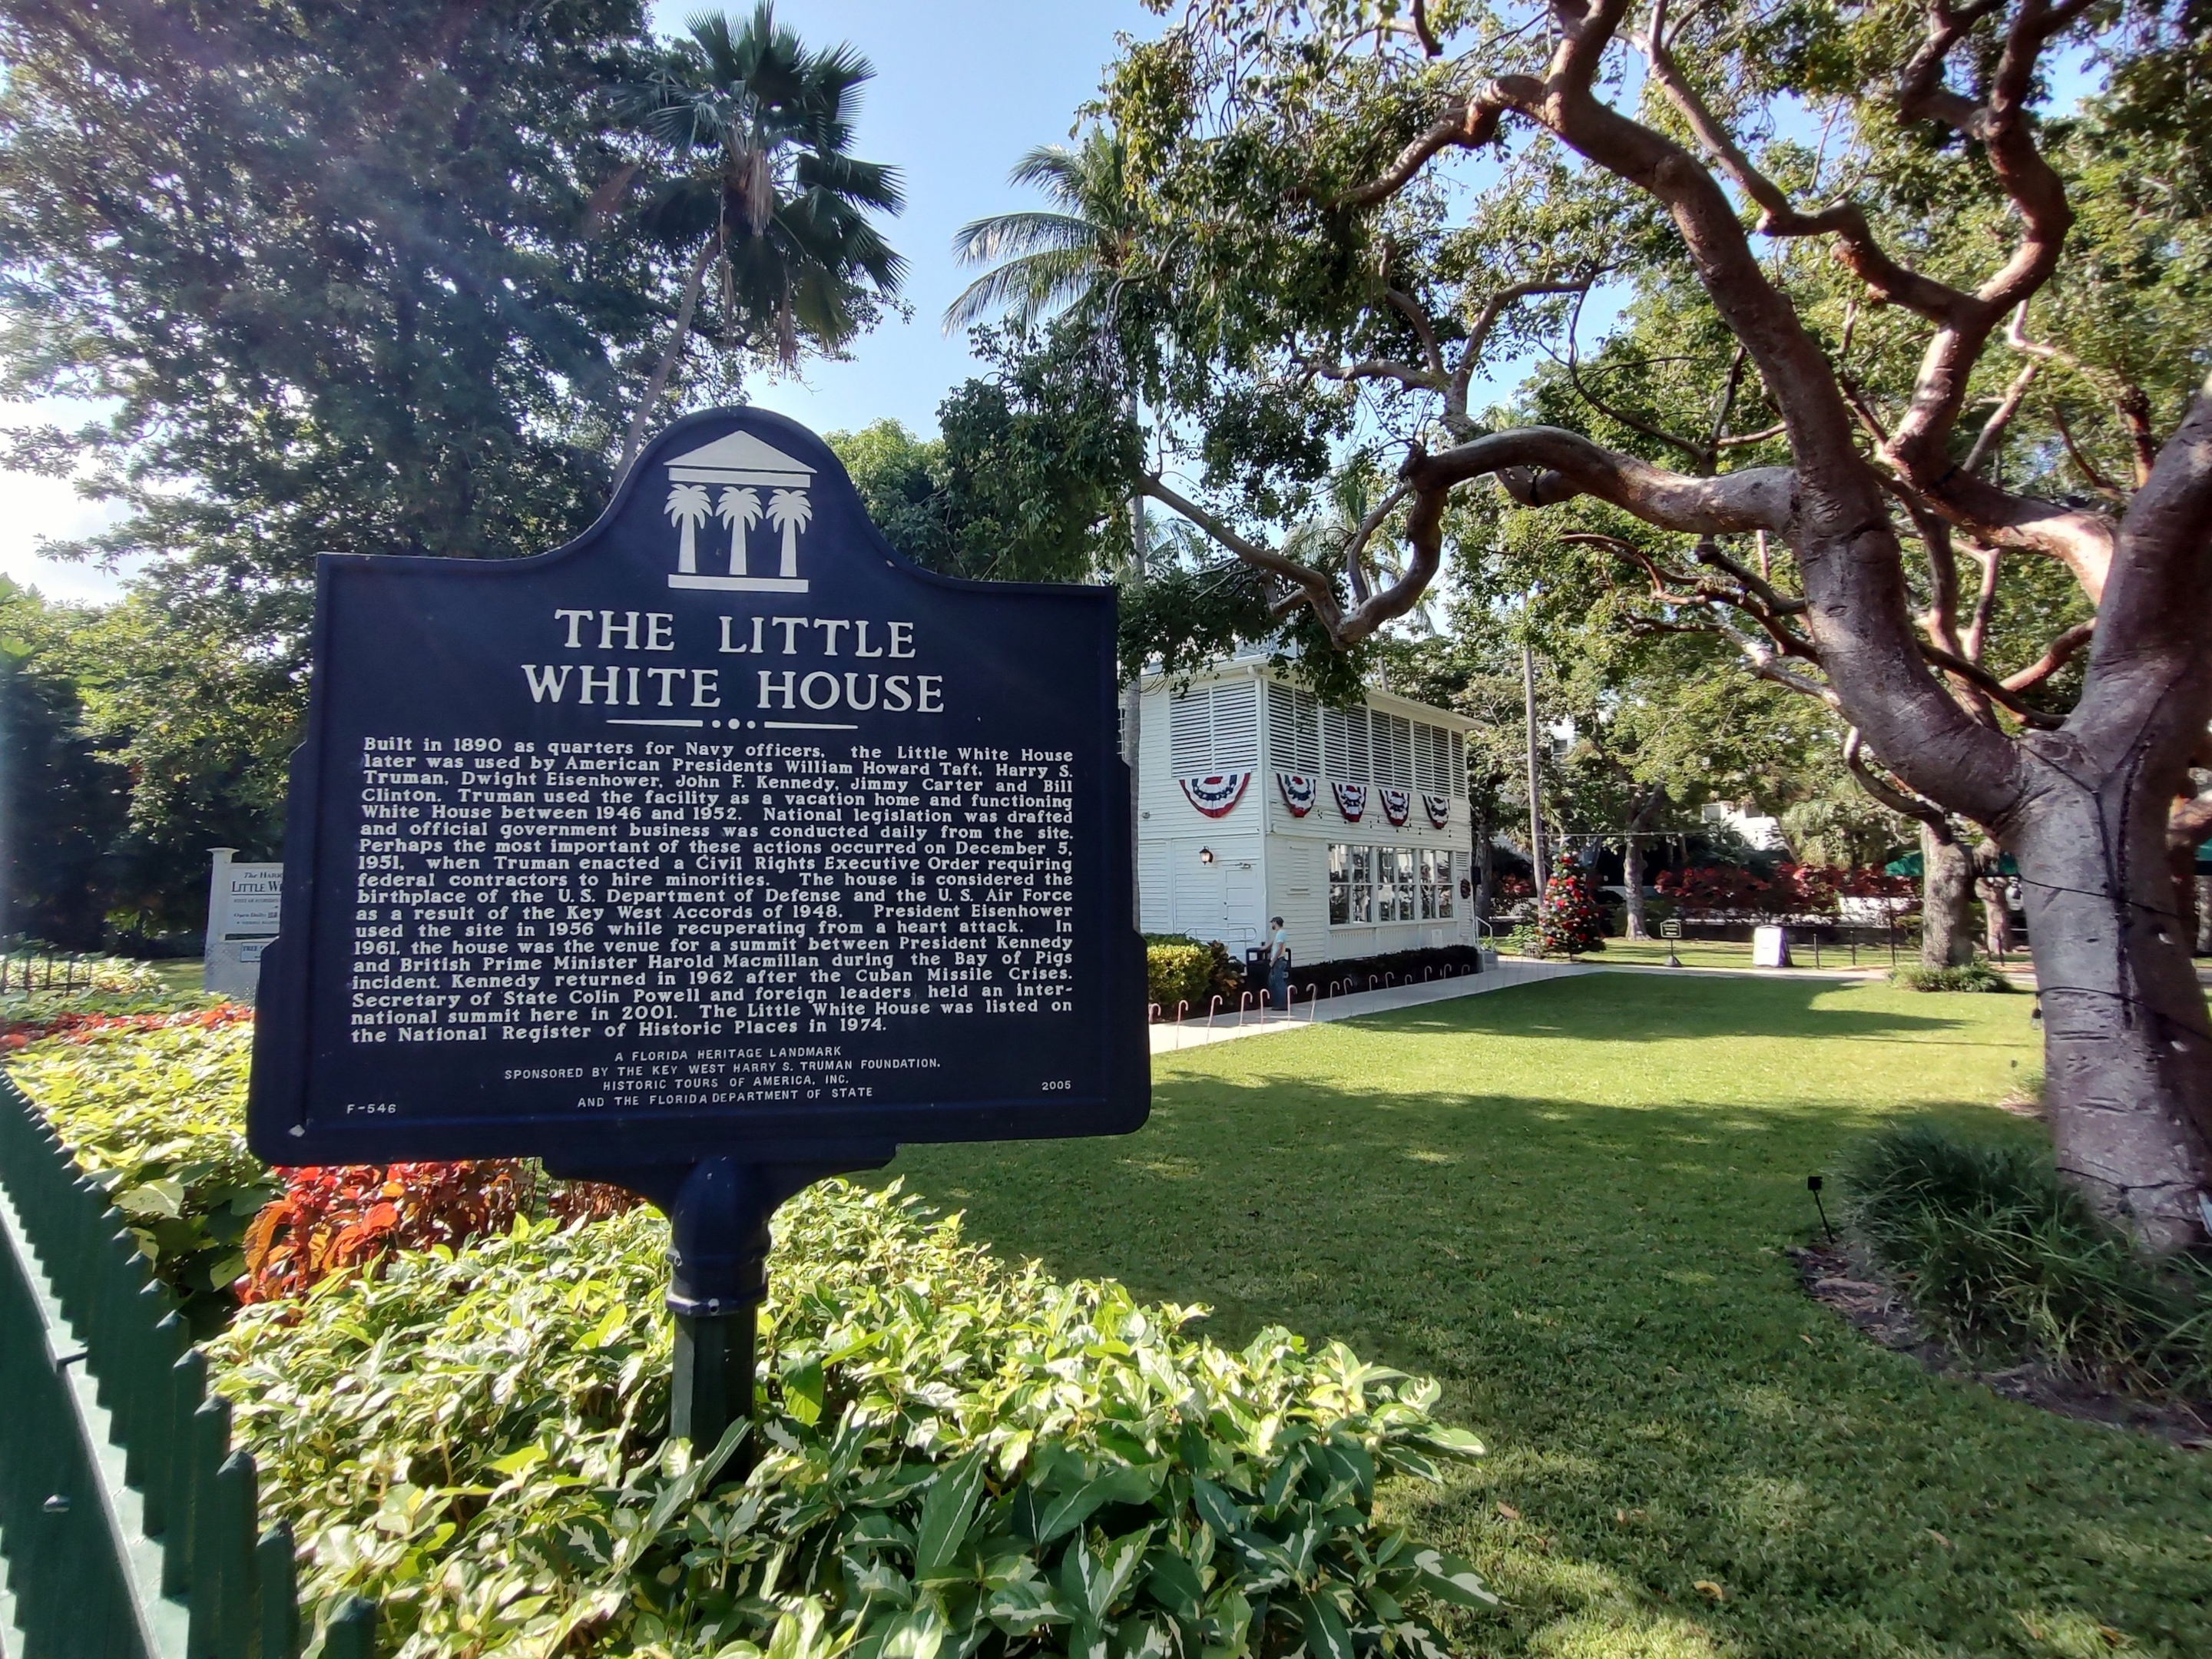 Key West's Truman Little White House